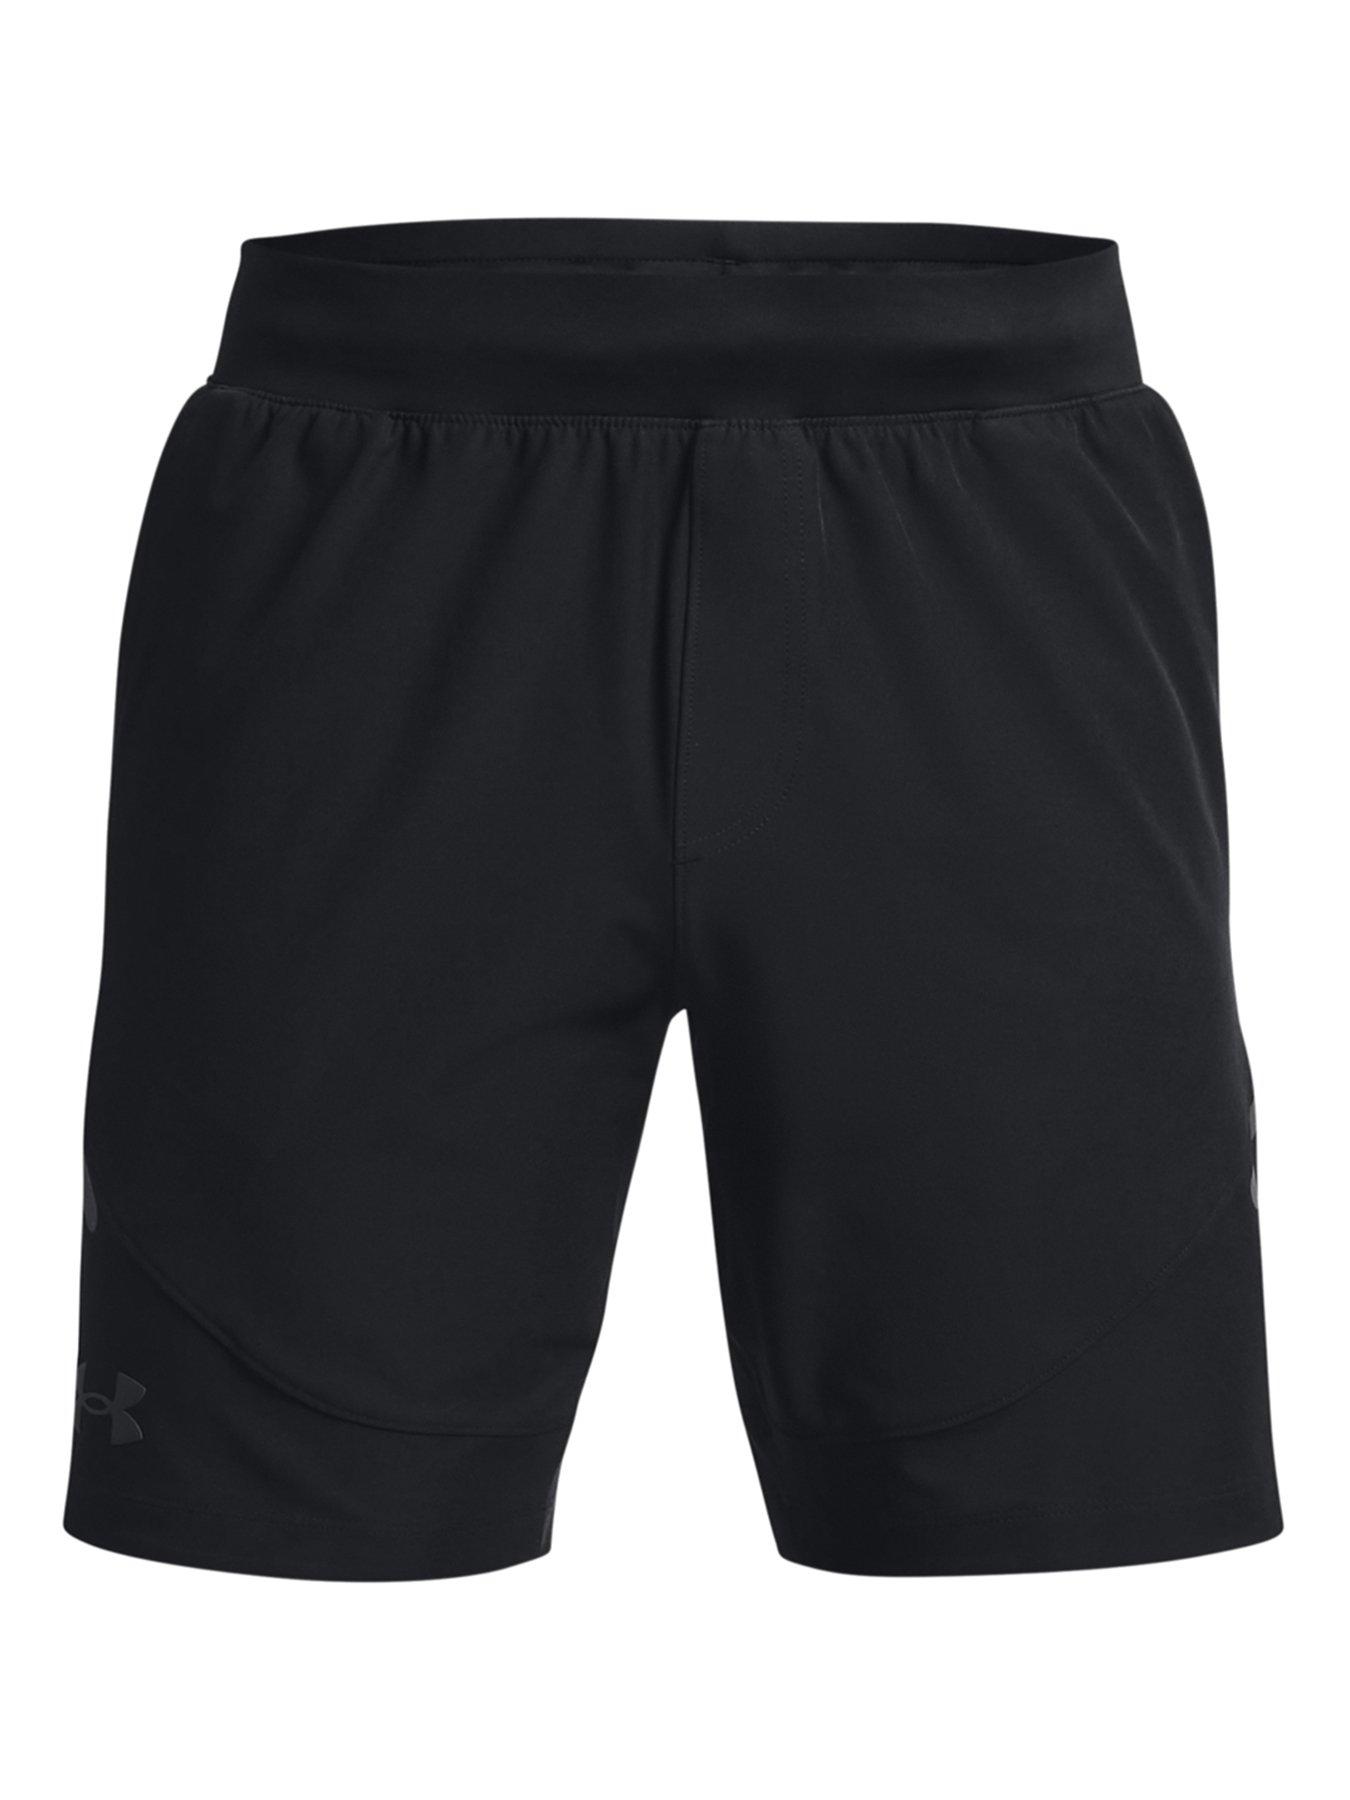 UNDER ARMOUR Men's Training Unstoppable Shorts - Black